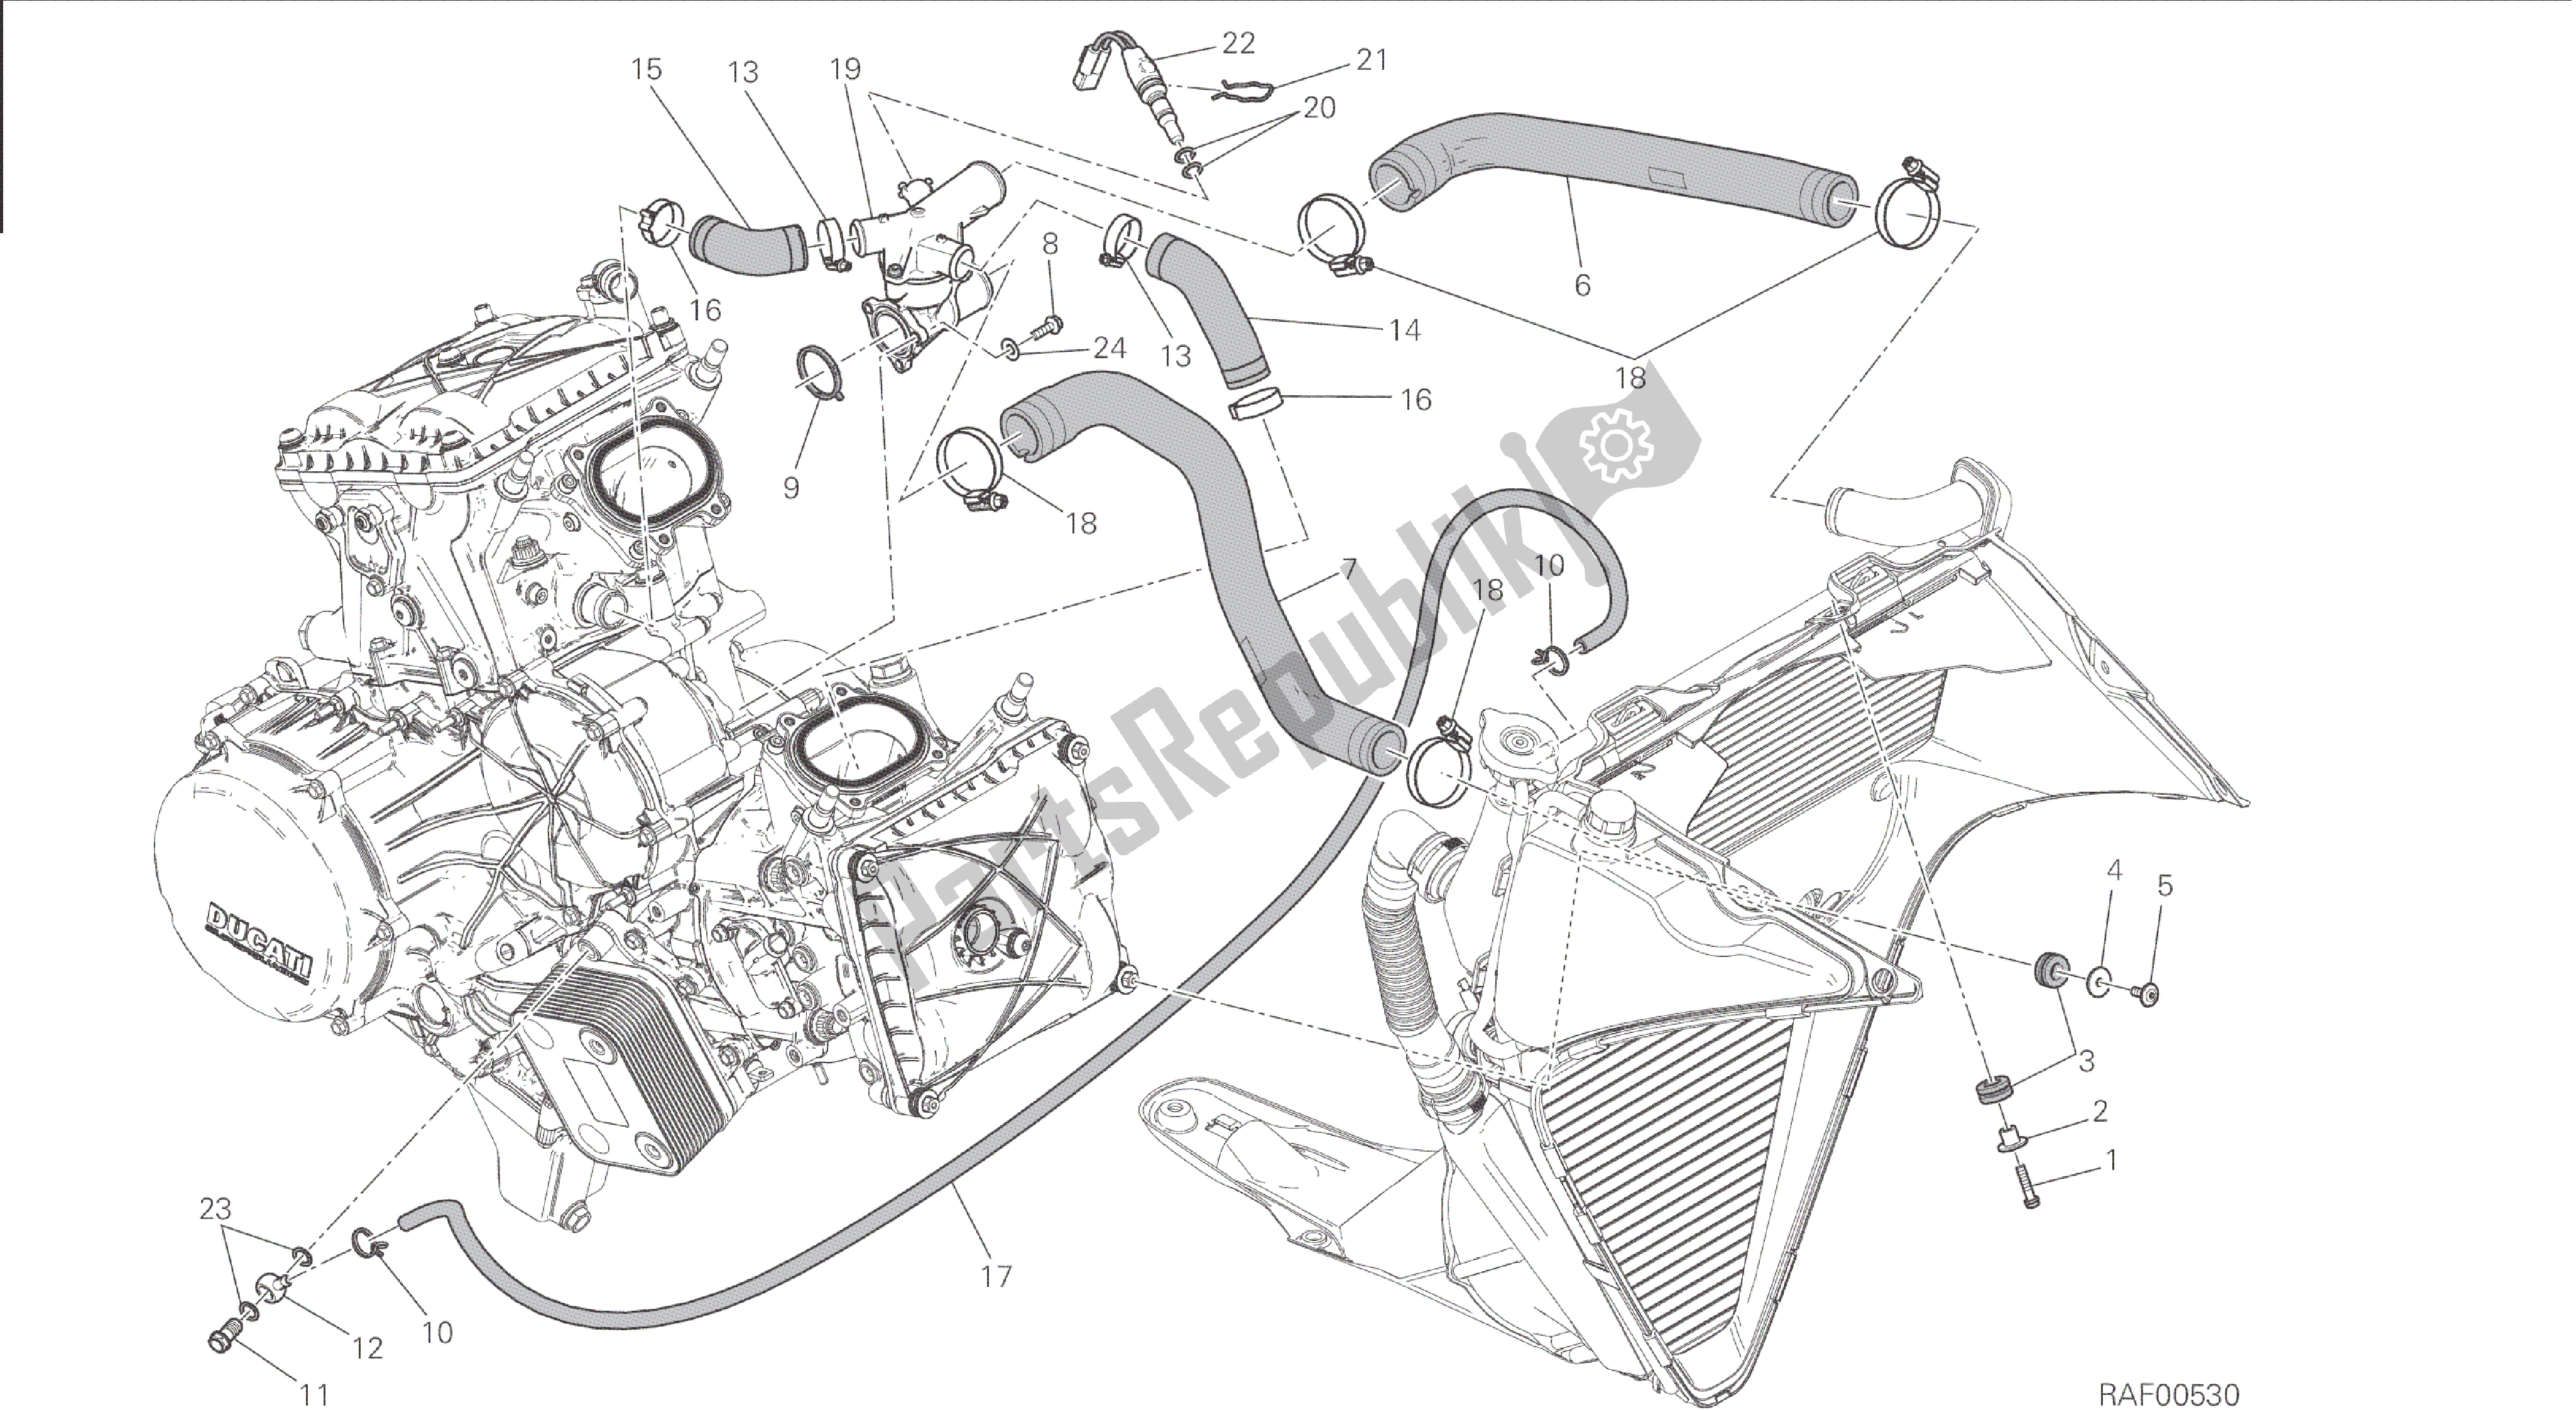 Alle onderdelen voor de Tekening 031 - Koelsysteem [mod: 1199 R; Xst: Aus, Eur, Fra, Jap, Twn] Groepsframe van de Ducati Panigale 1198 2015